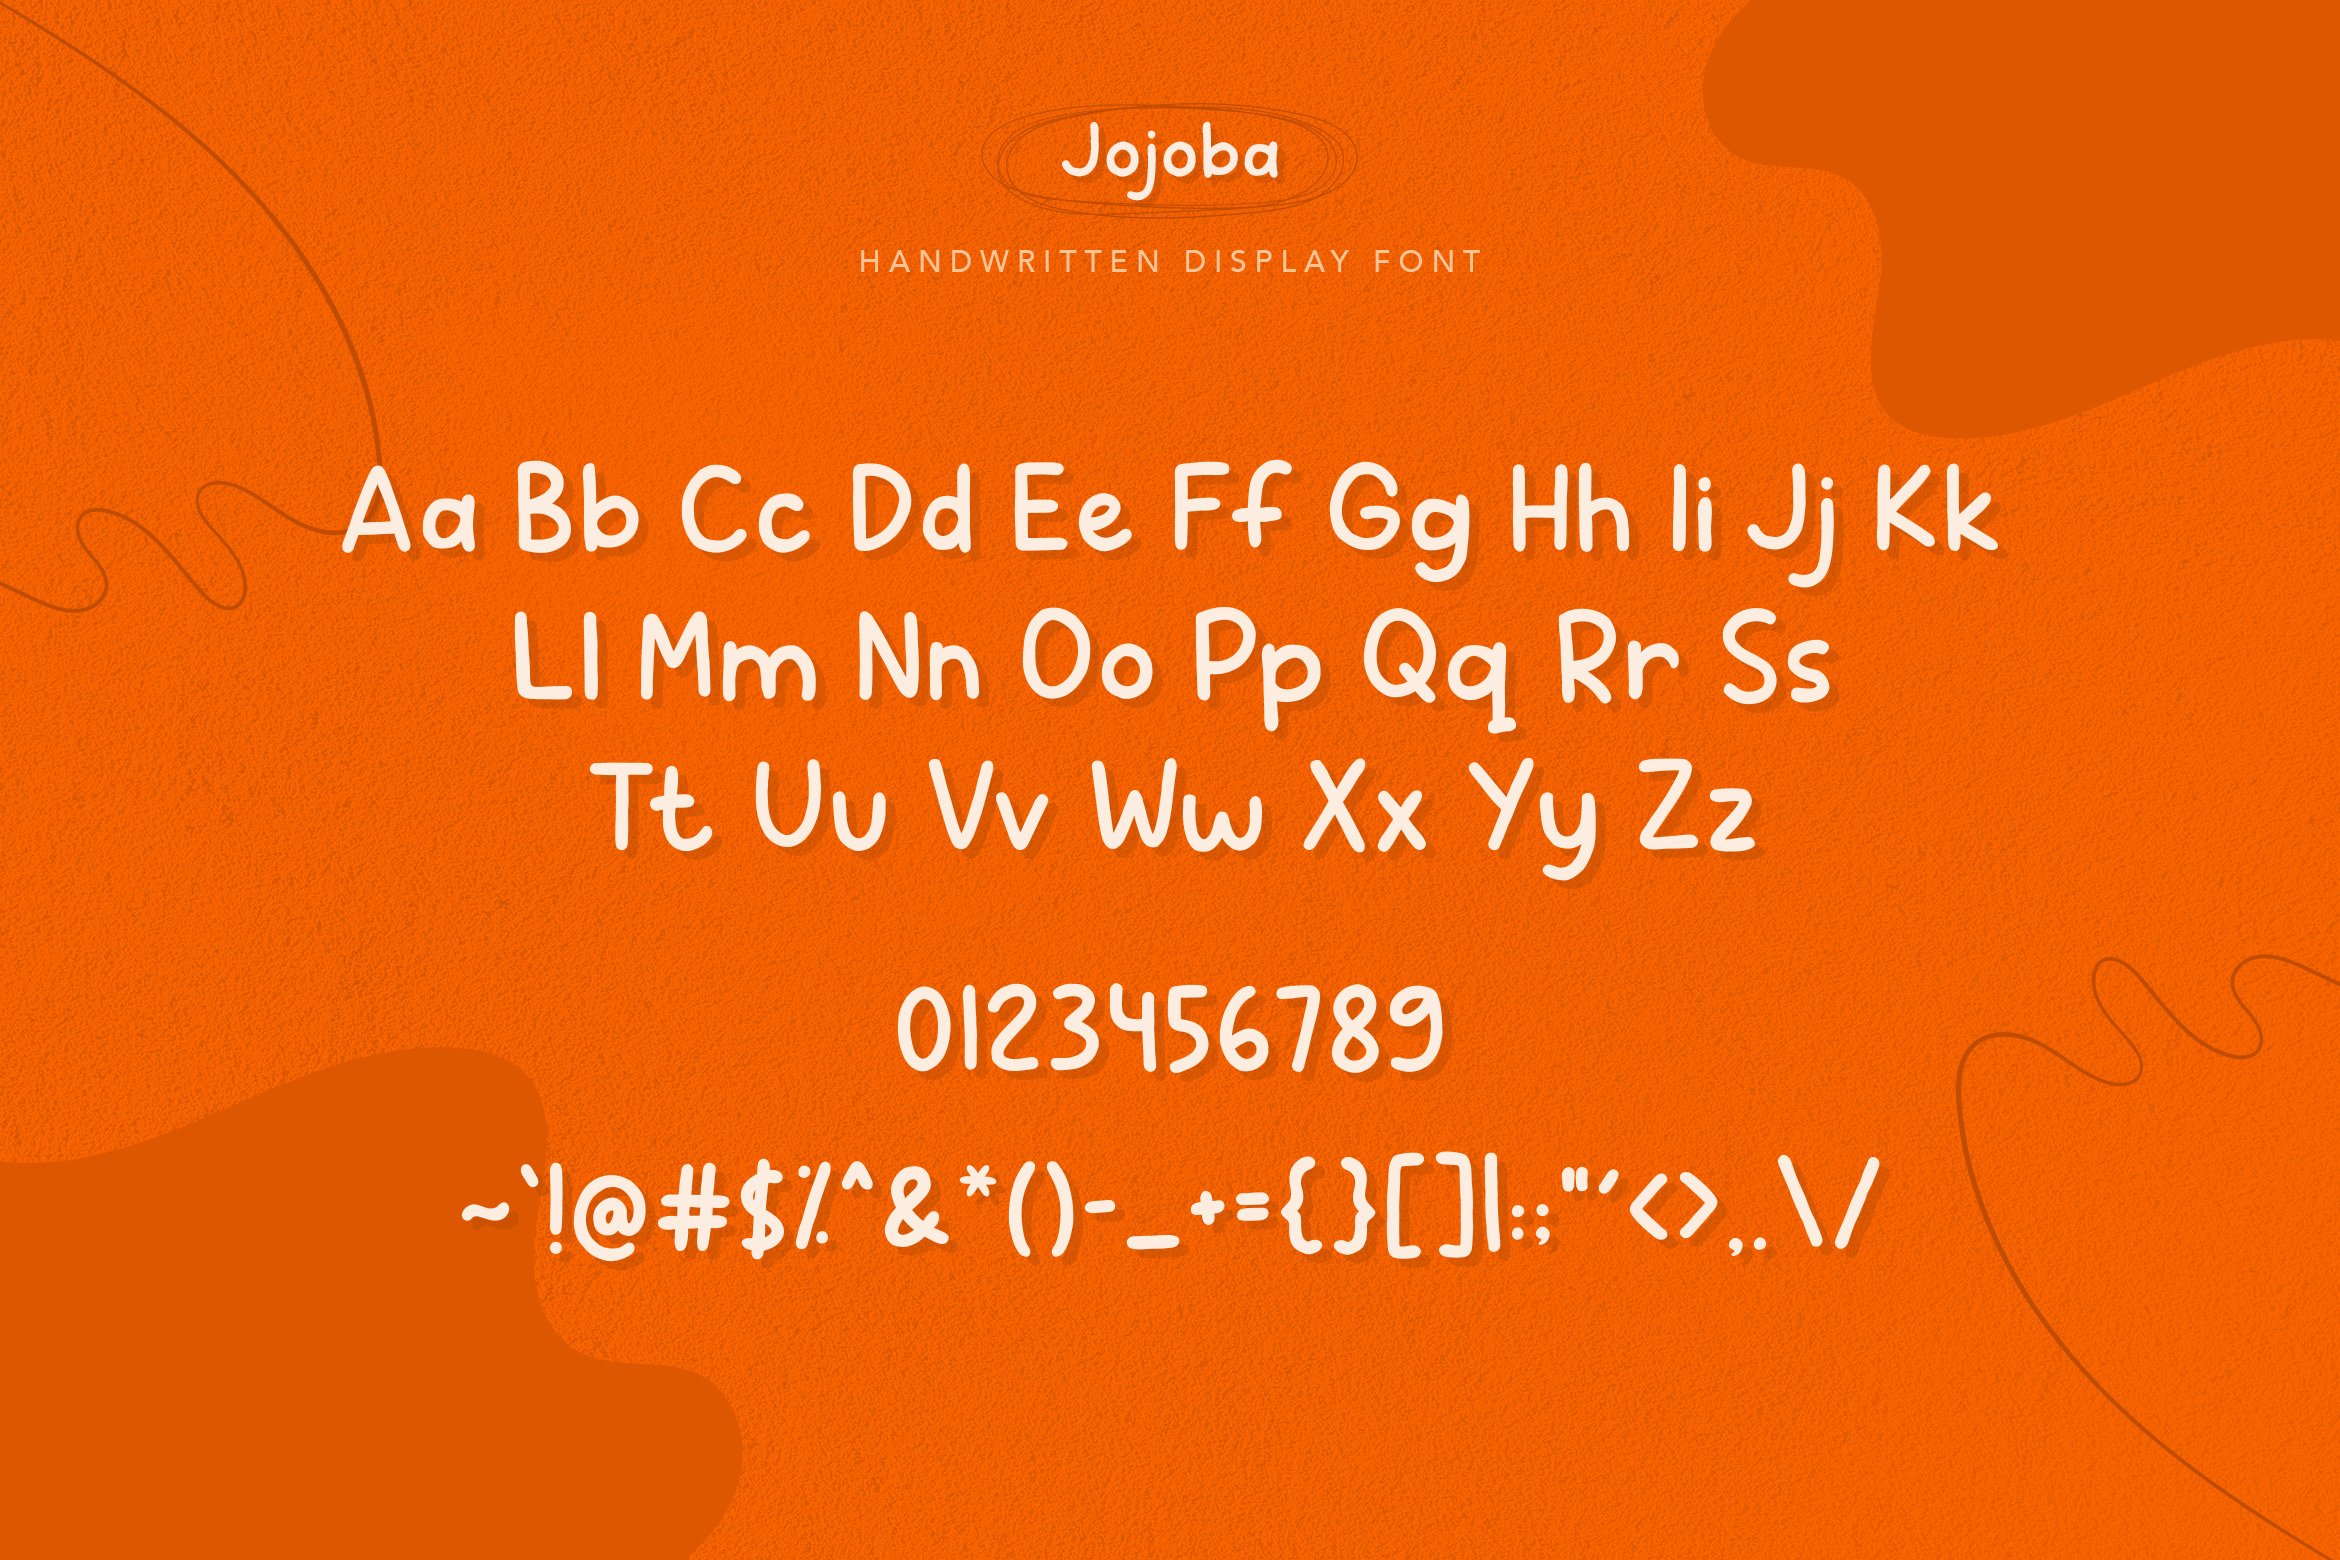 General view of the Jojoba font.